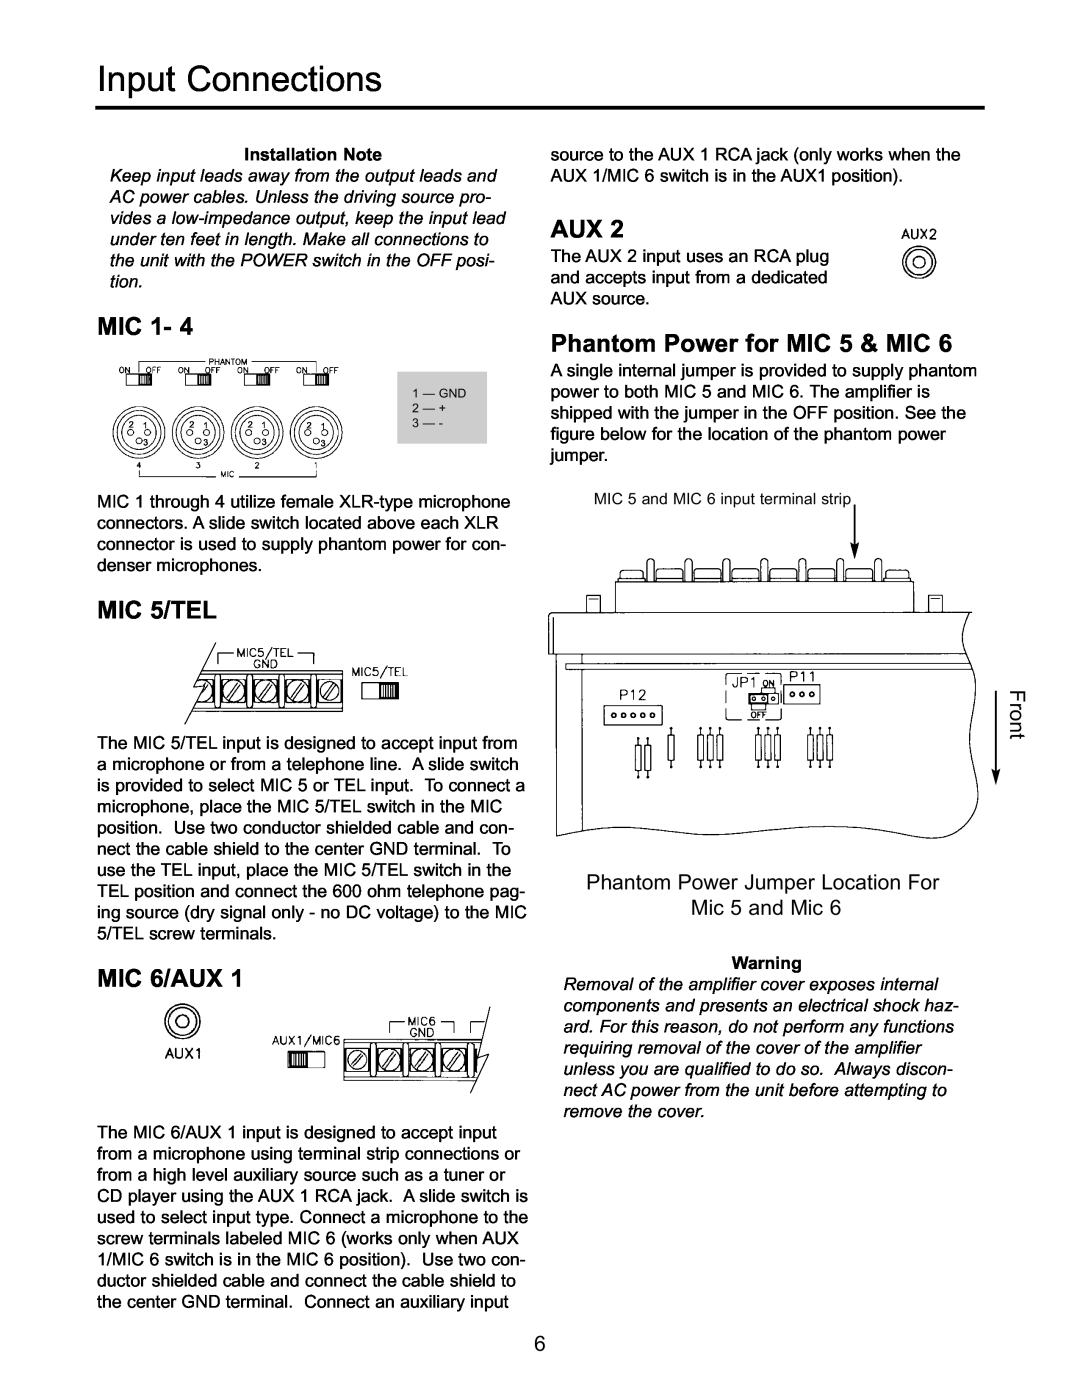 Bogen GS-250, GS-150, GS-60, GS-100, GS-35 Input Connections, Mic, MIC 5/TEL, MIC 6/AUX, Phantom Power for MIC 5 & MIC, Front 